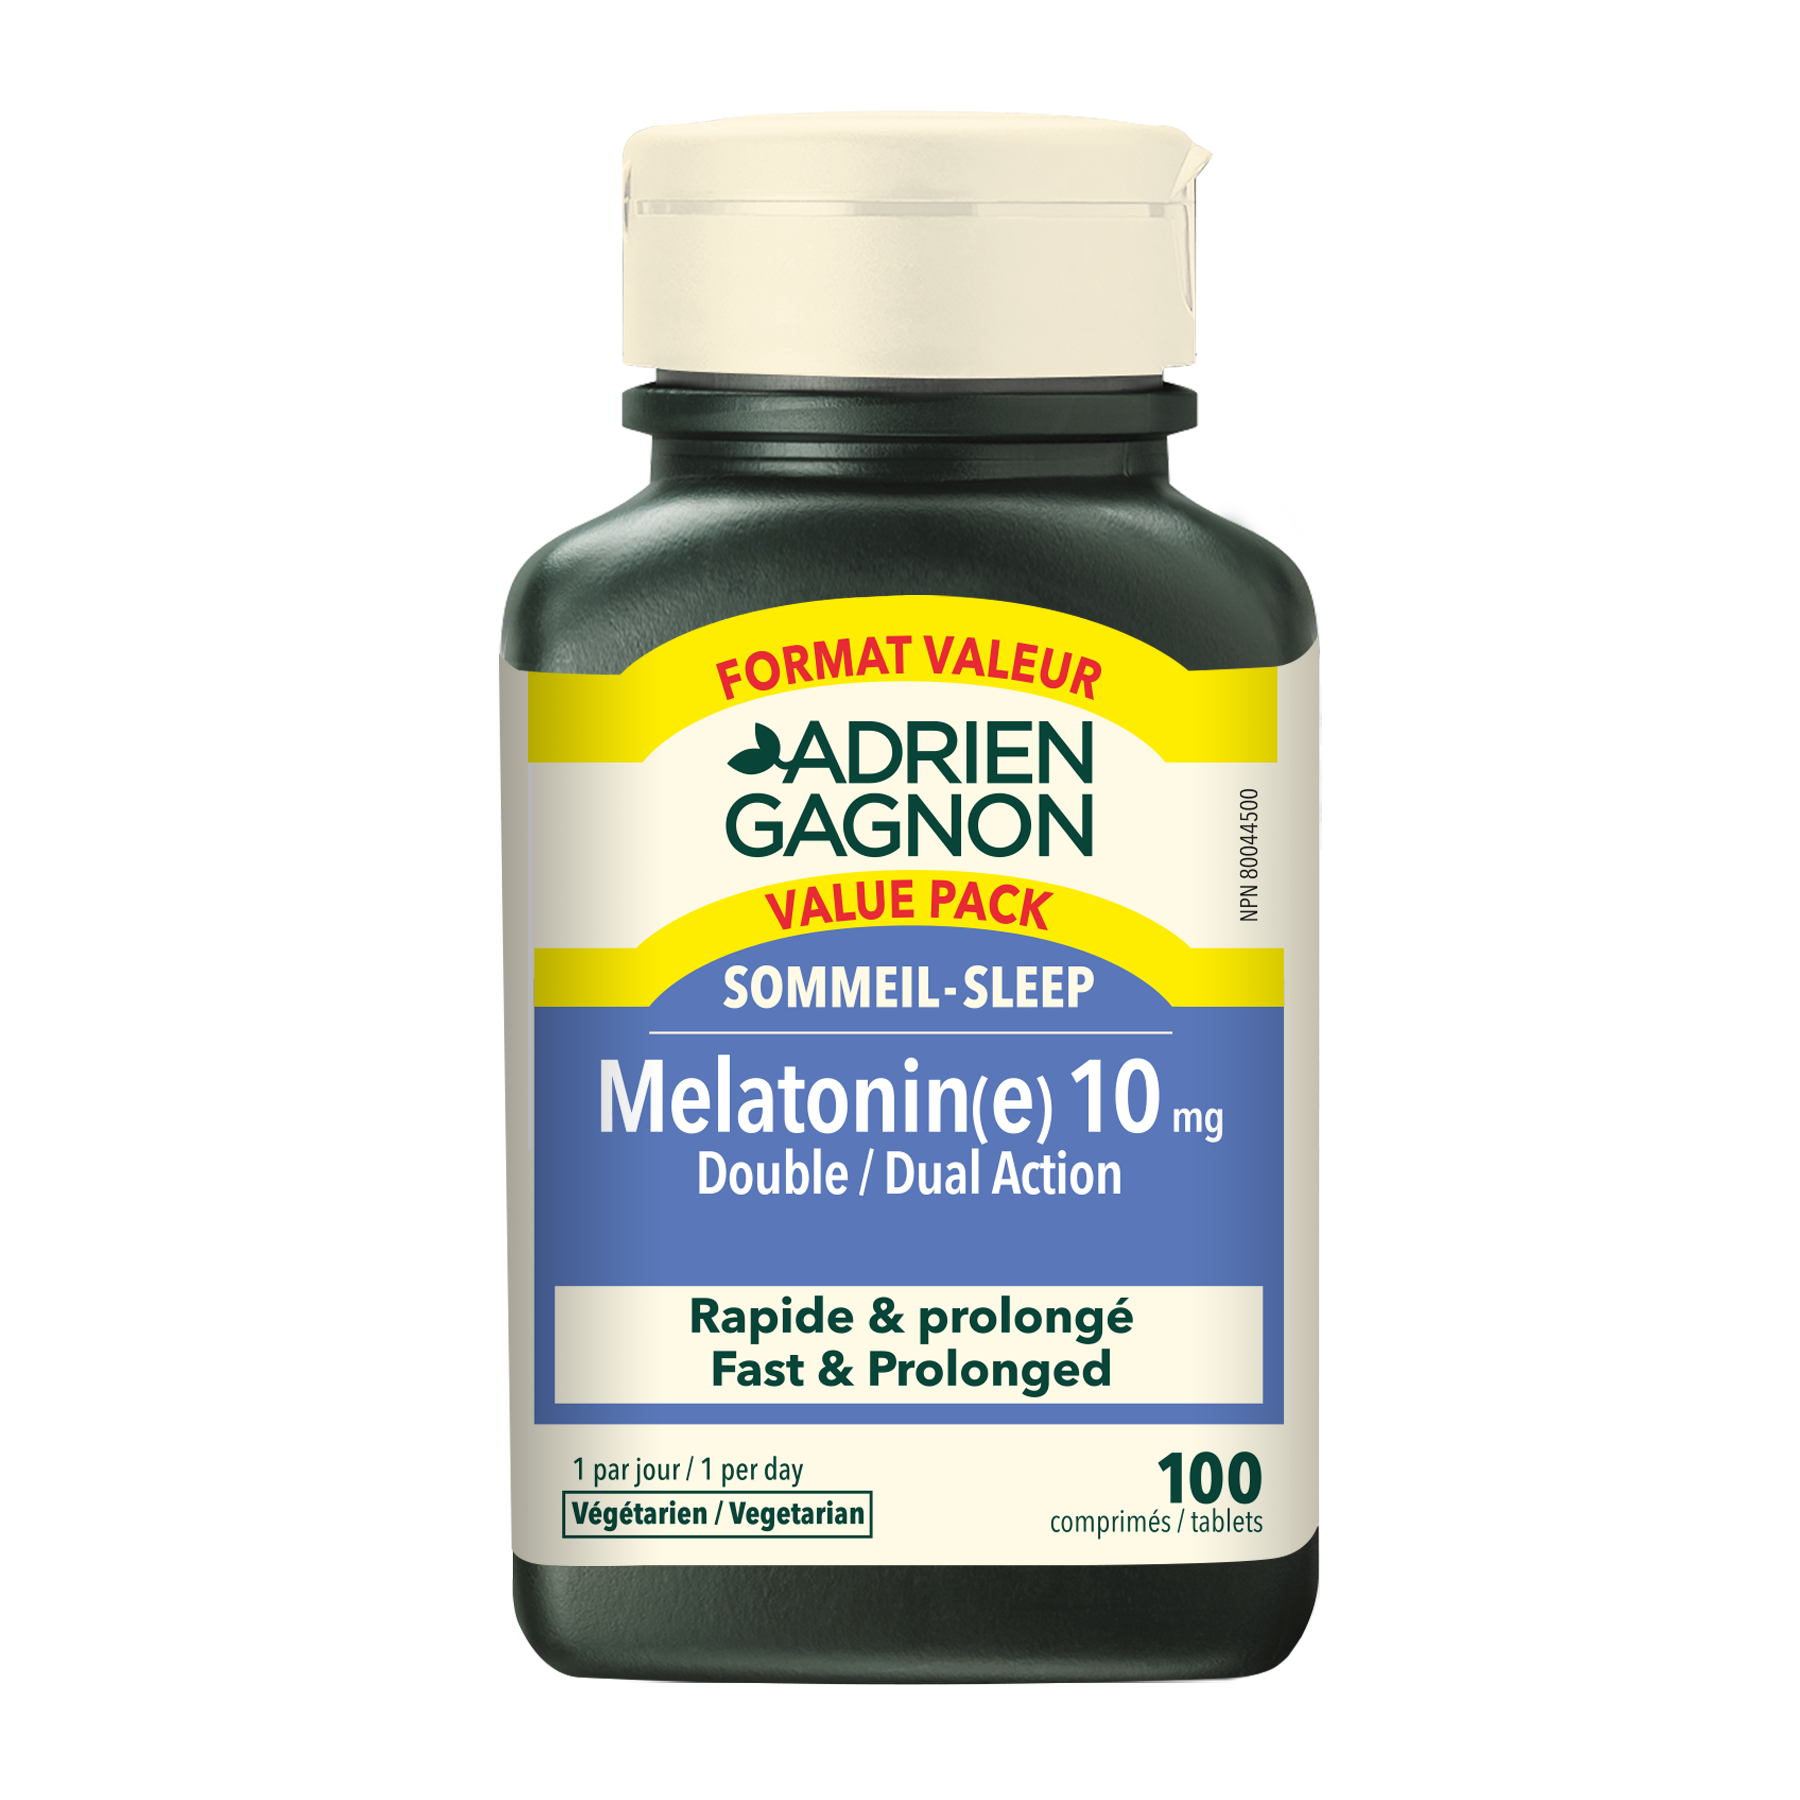 Melatonine 10 mg Double action - Format Valeur|| Melatonin 10 mg Double action - Value Pack